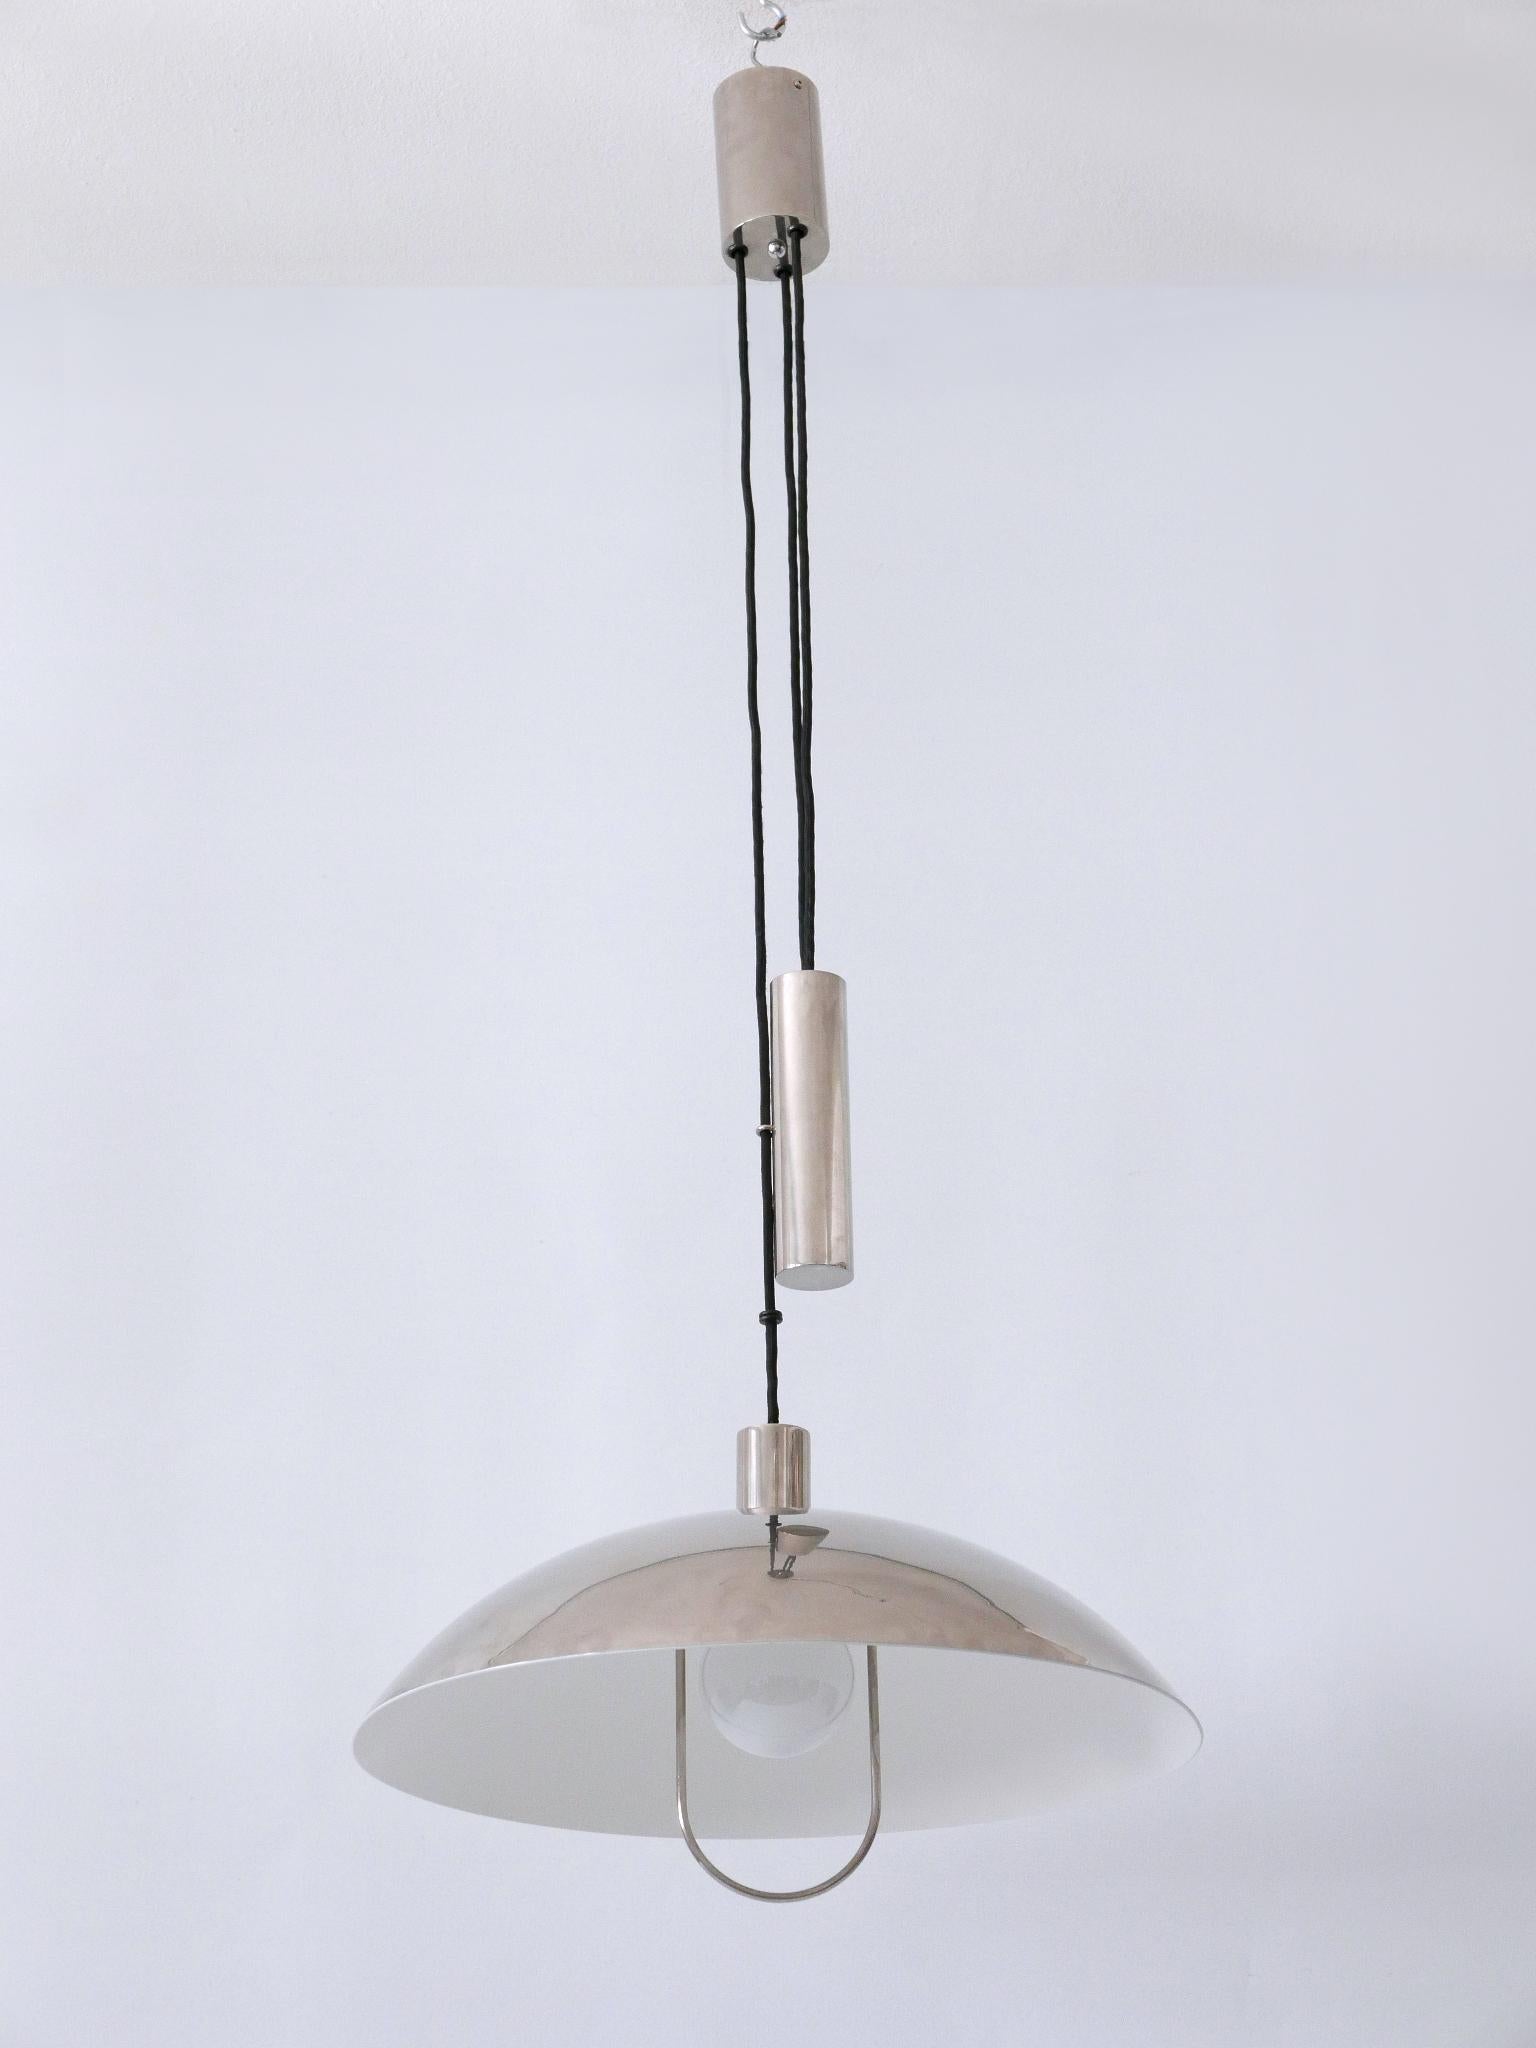 Early Tecnolumen Pendant Lamp 'Bauhaus HMB 25/500' by Marianne Brandt 1980s For Sale 6